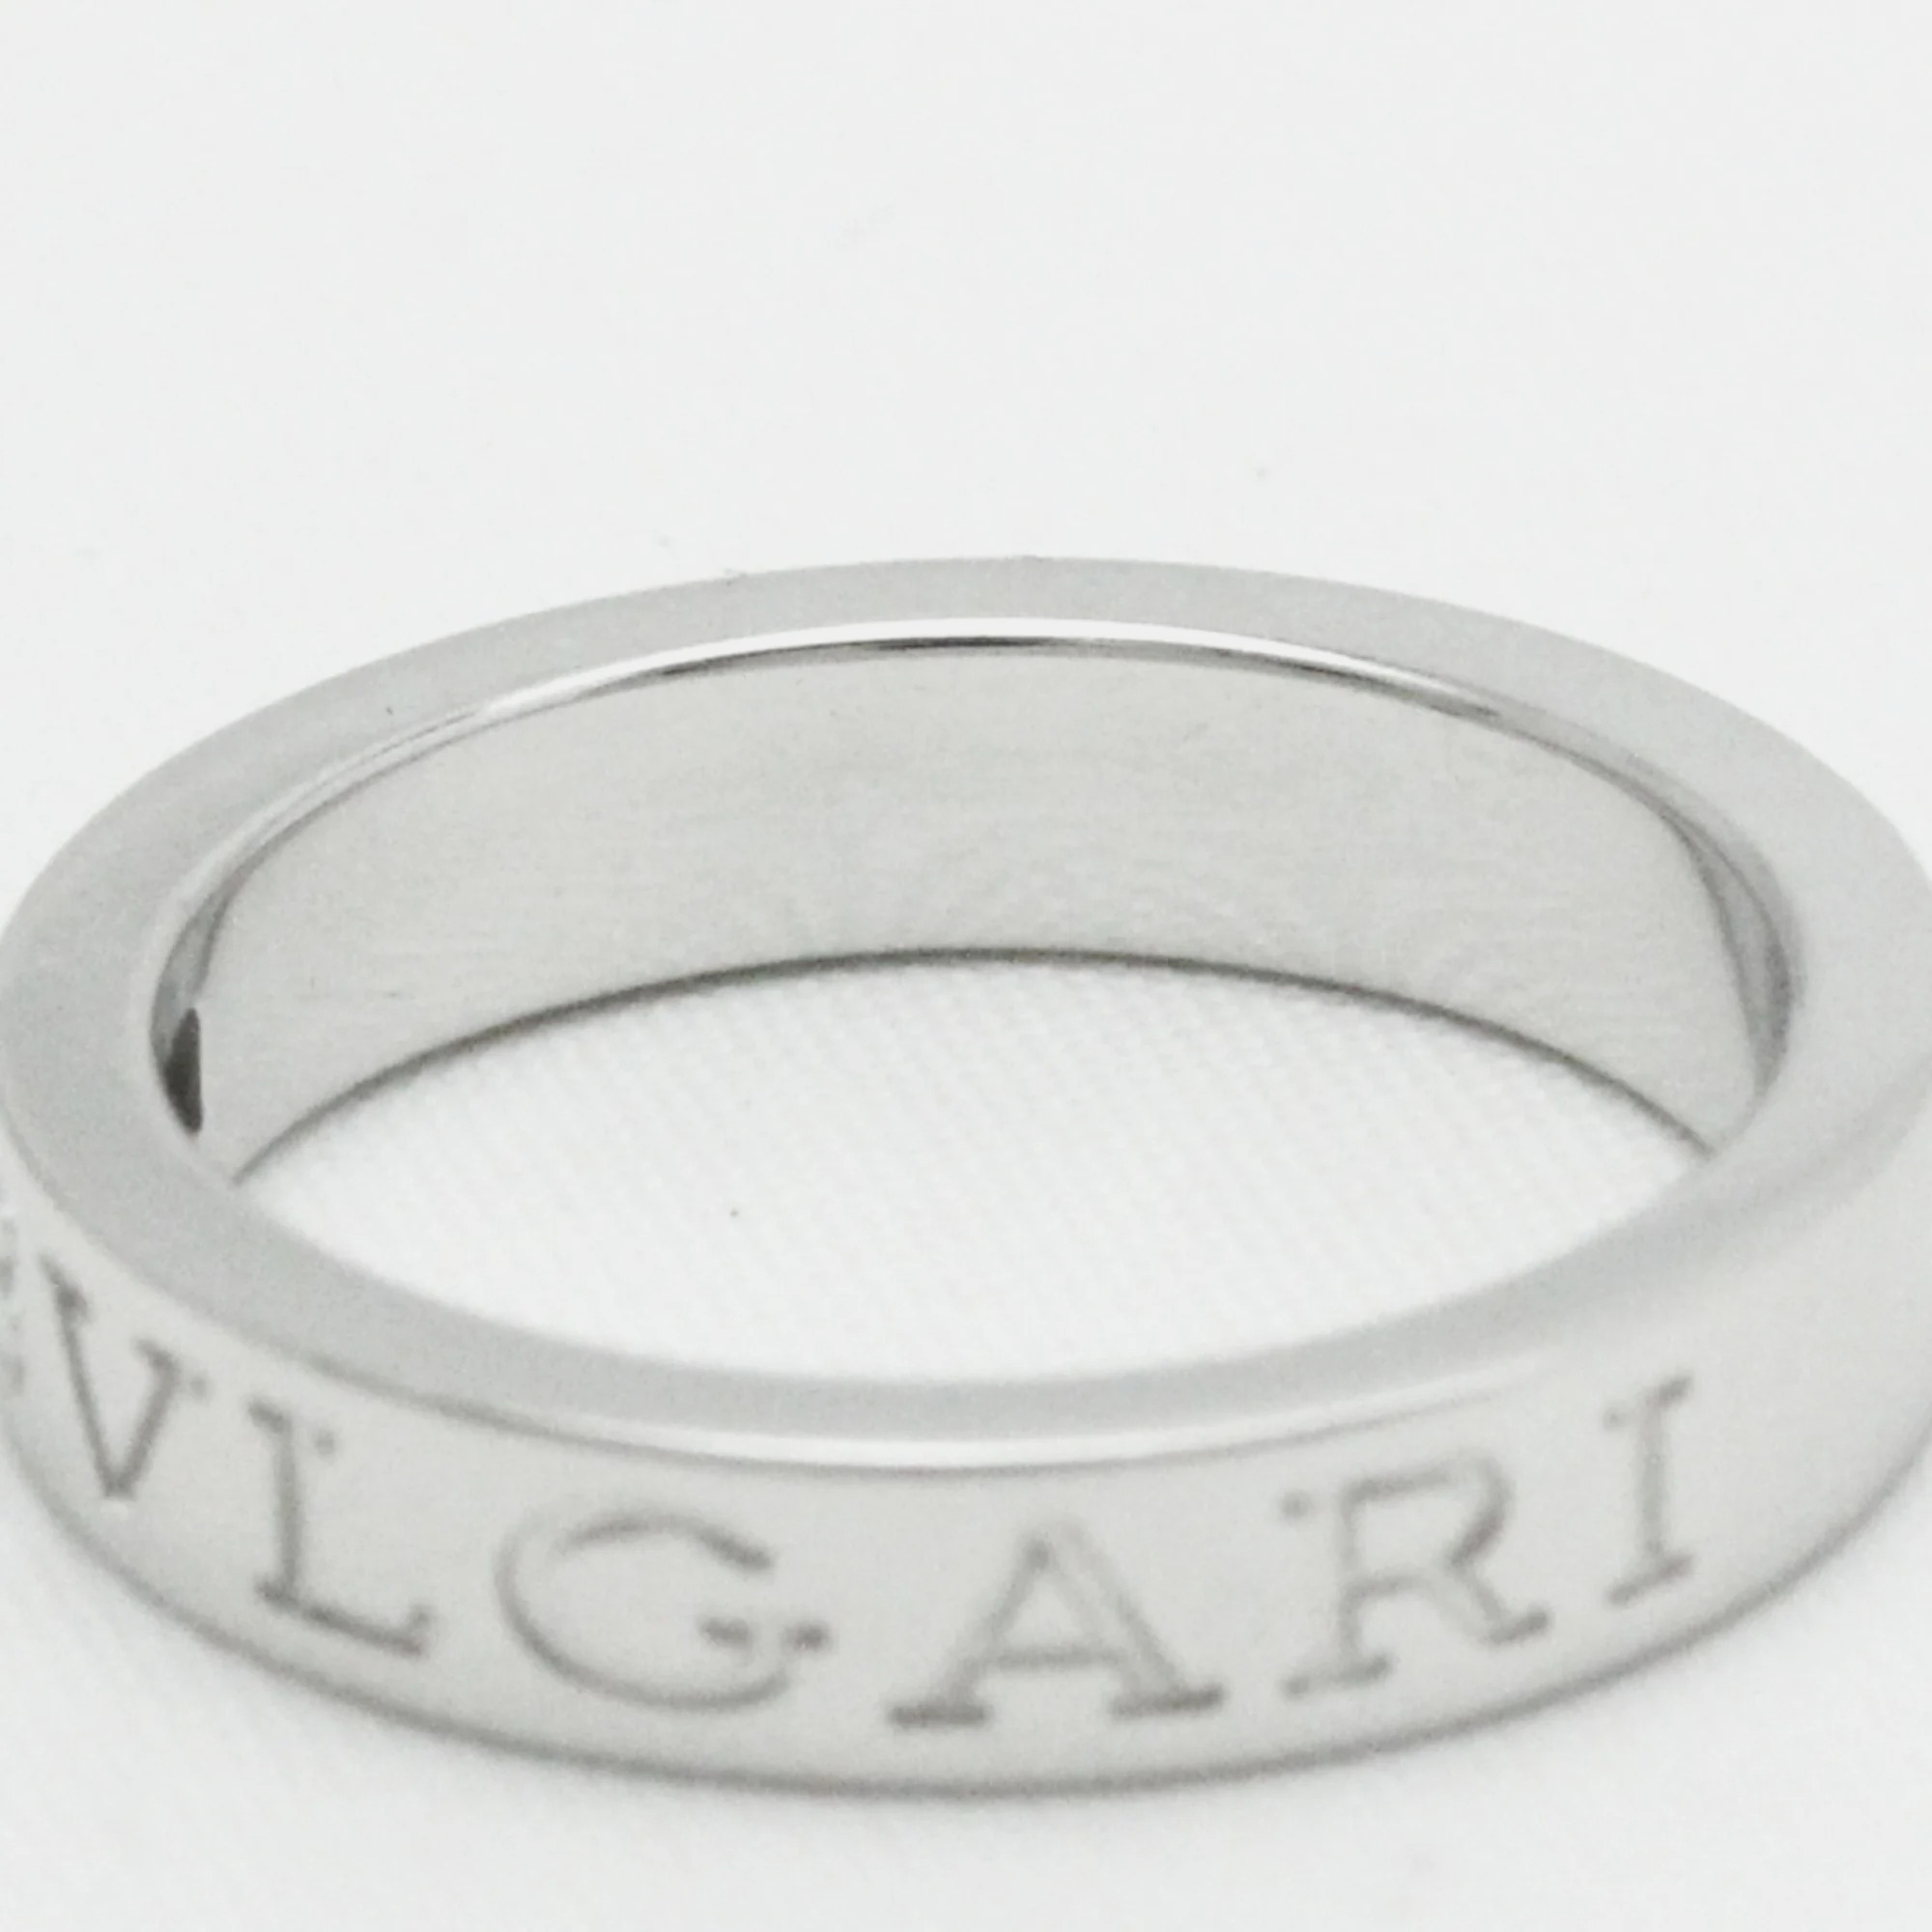 Bvlgari 18K White Gold Diamond Ring EU 52